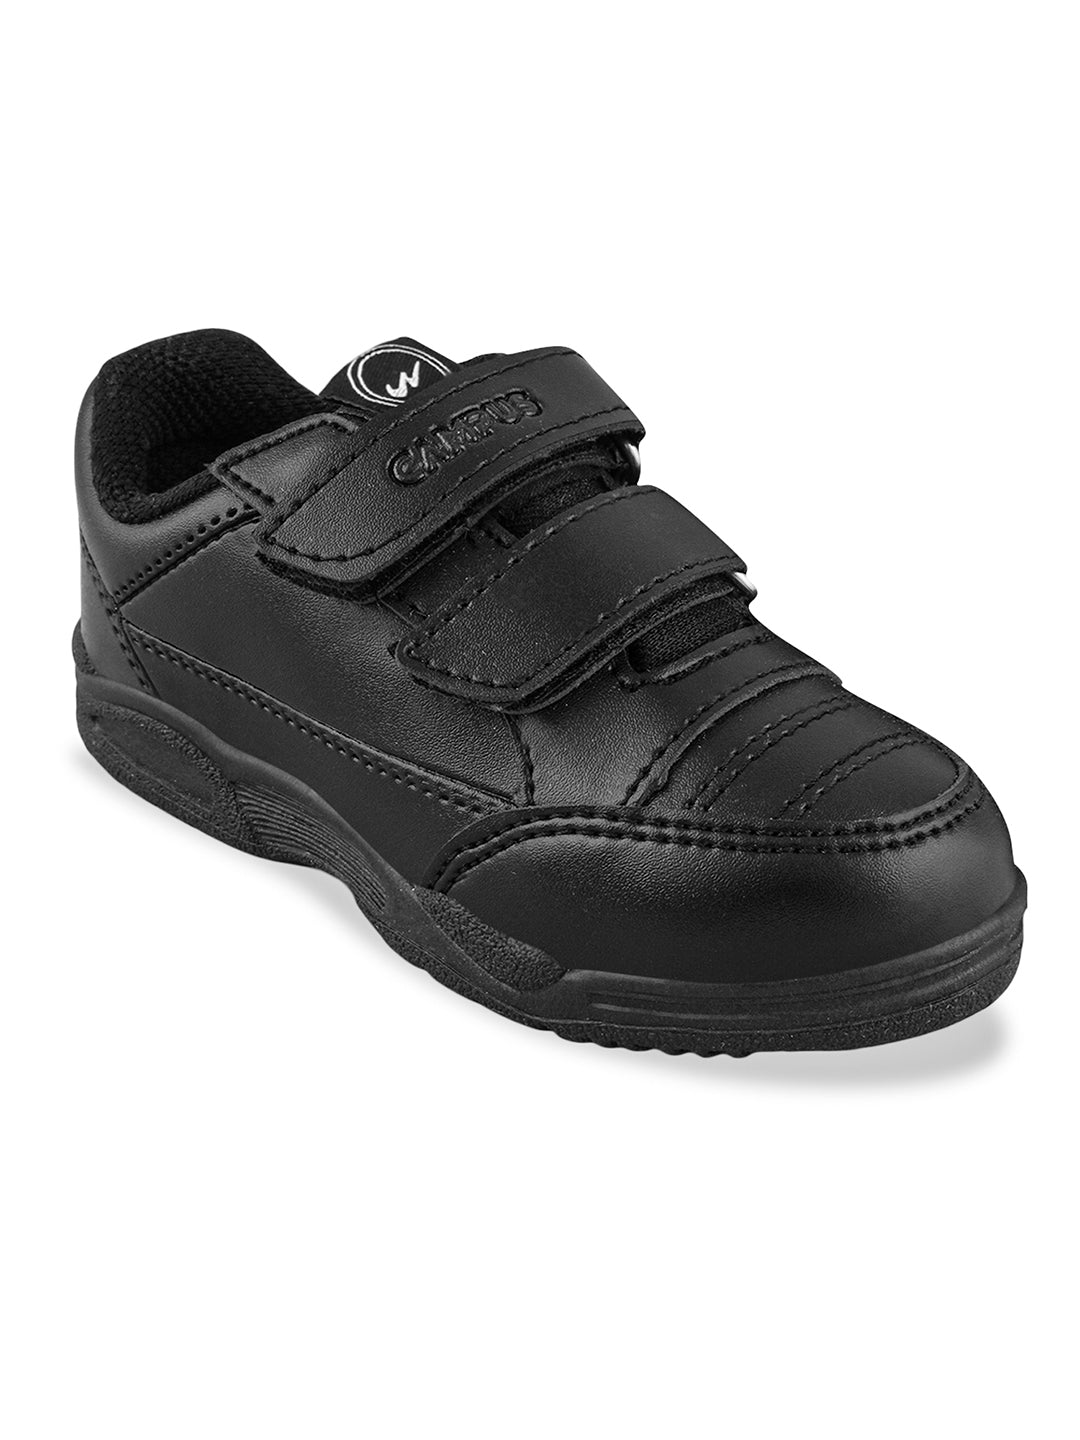 Cs 1260va Black Child School Shoes